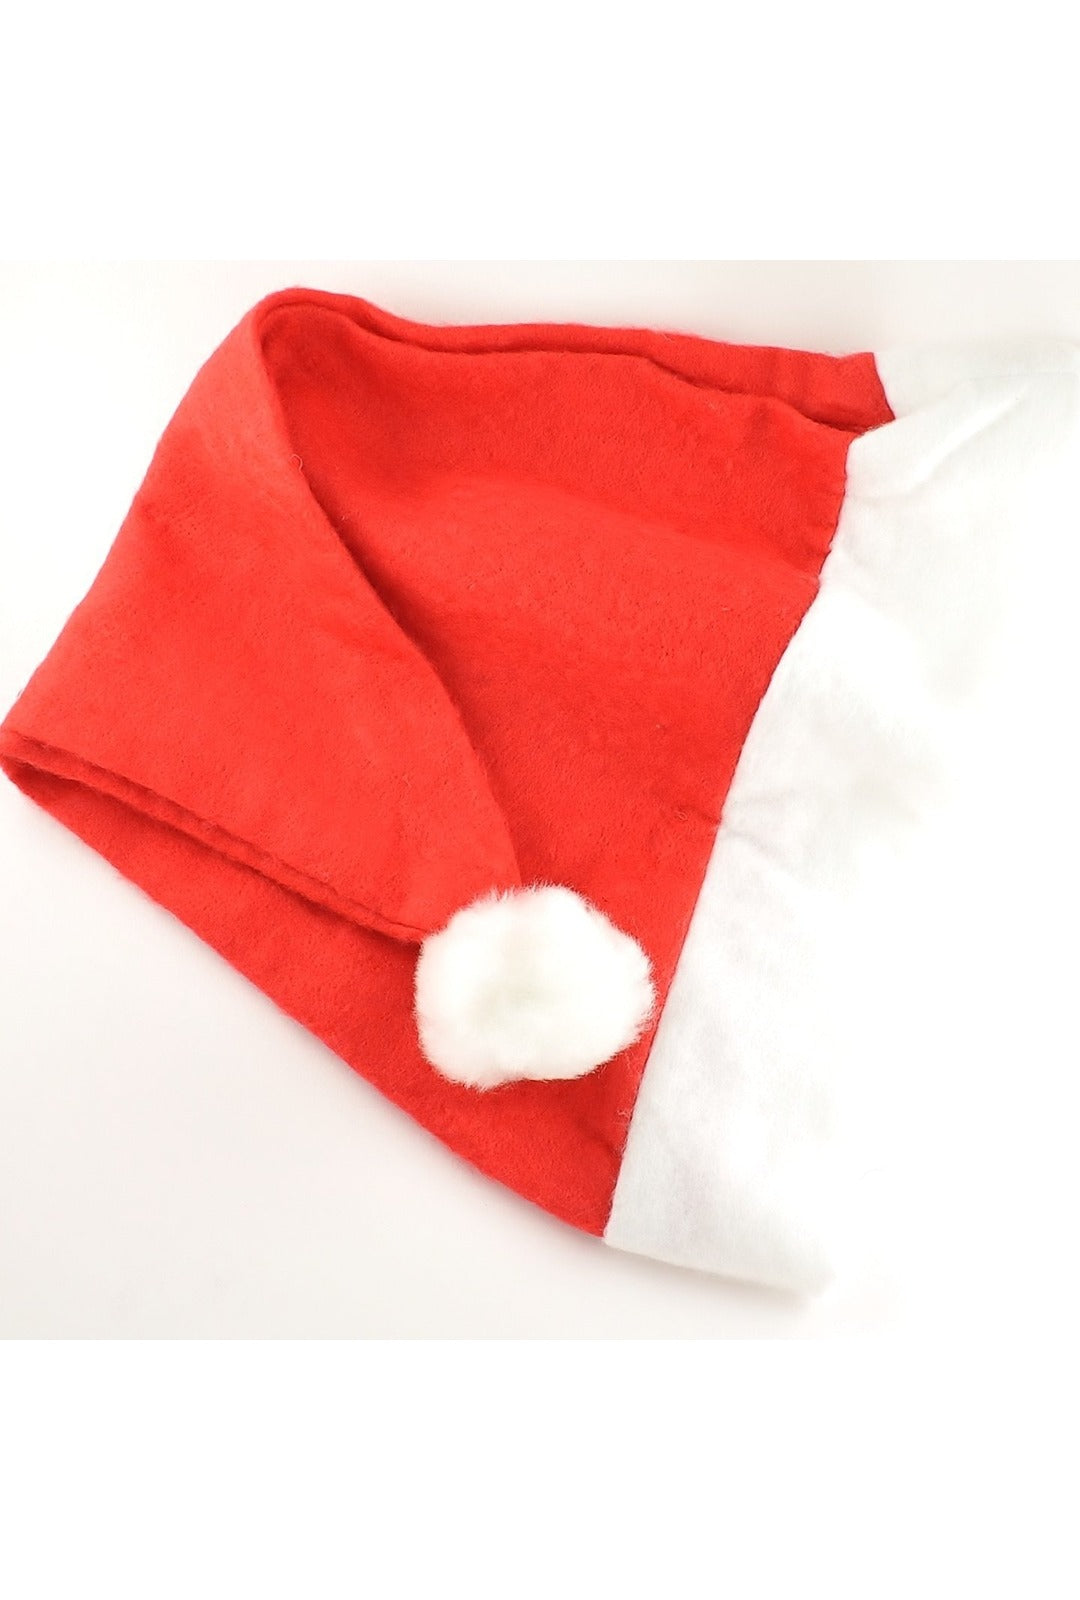 VALUE PACK Basic Christmas Santa Hats